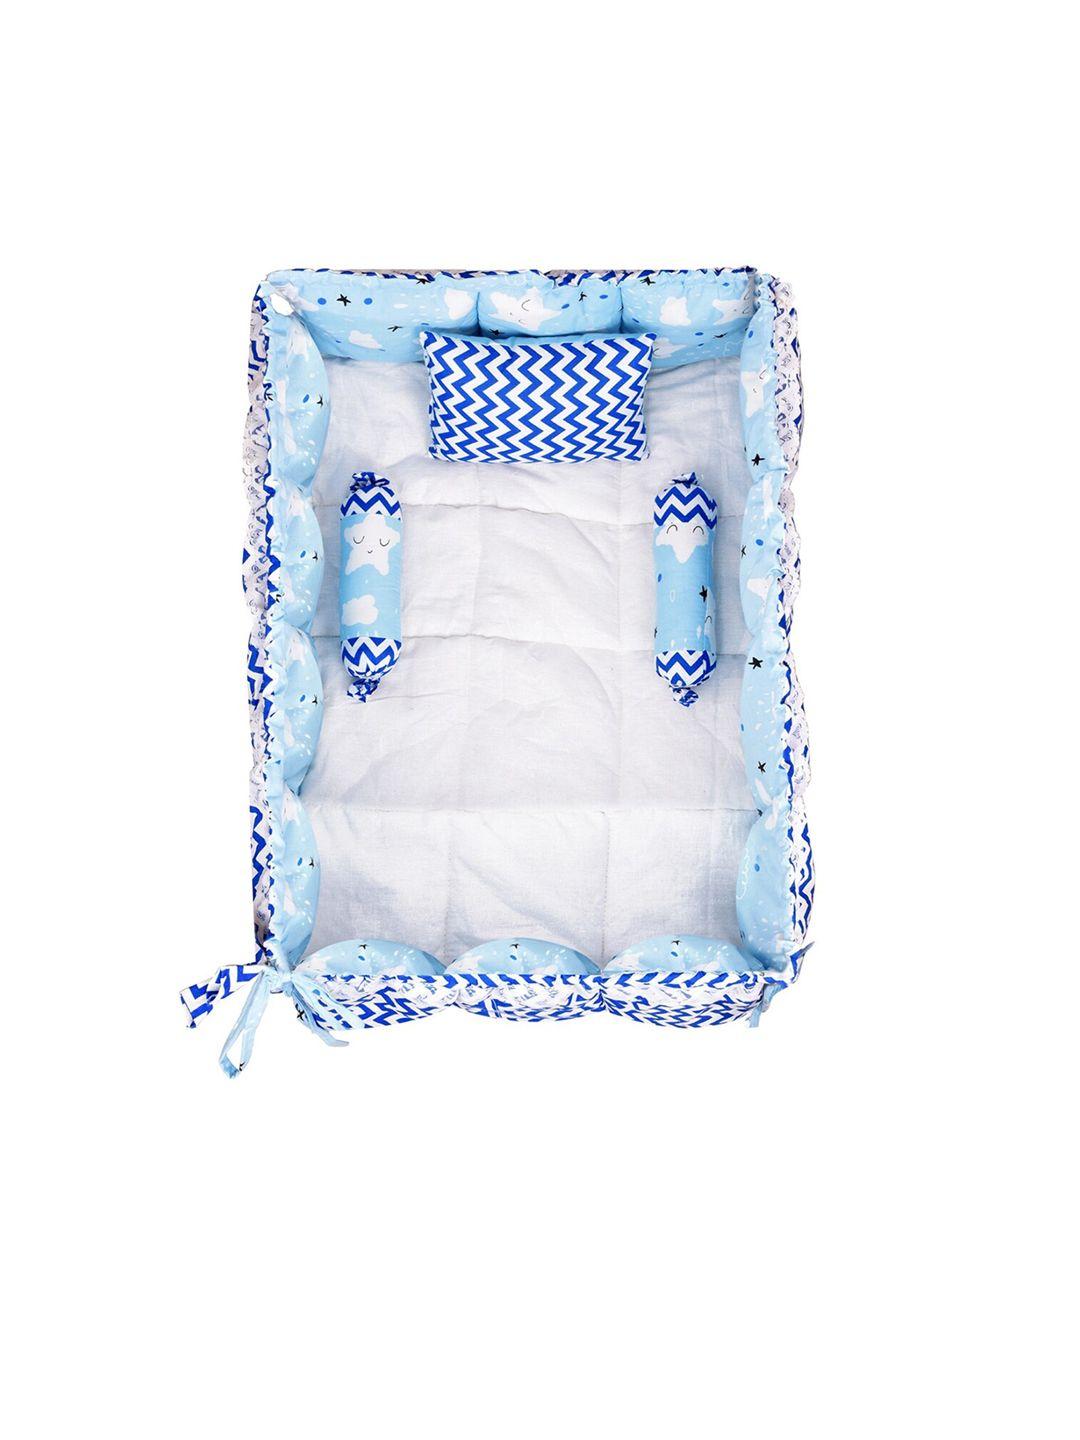 lorem infant blue & white printed pillows & square shape cotton baby bed sets